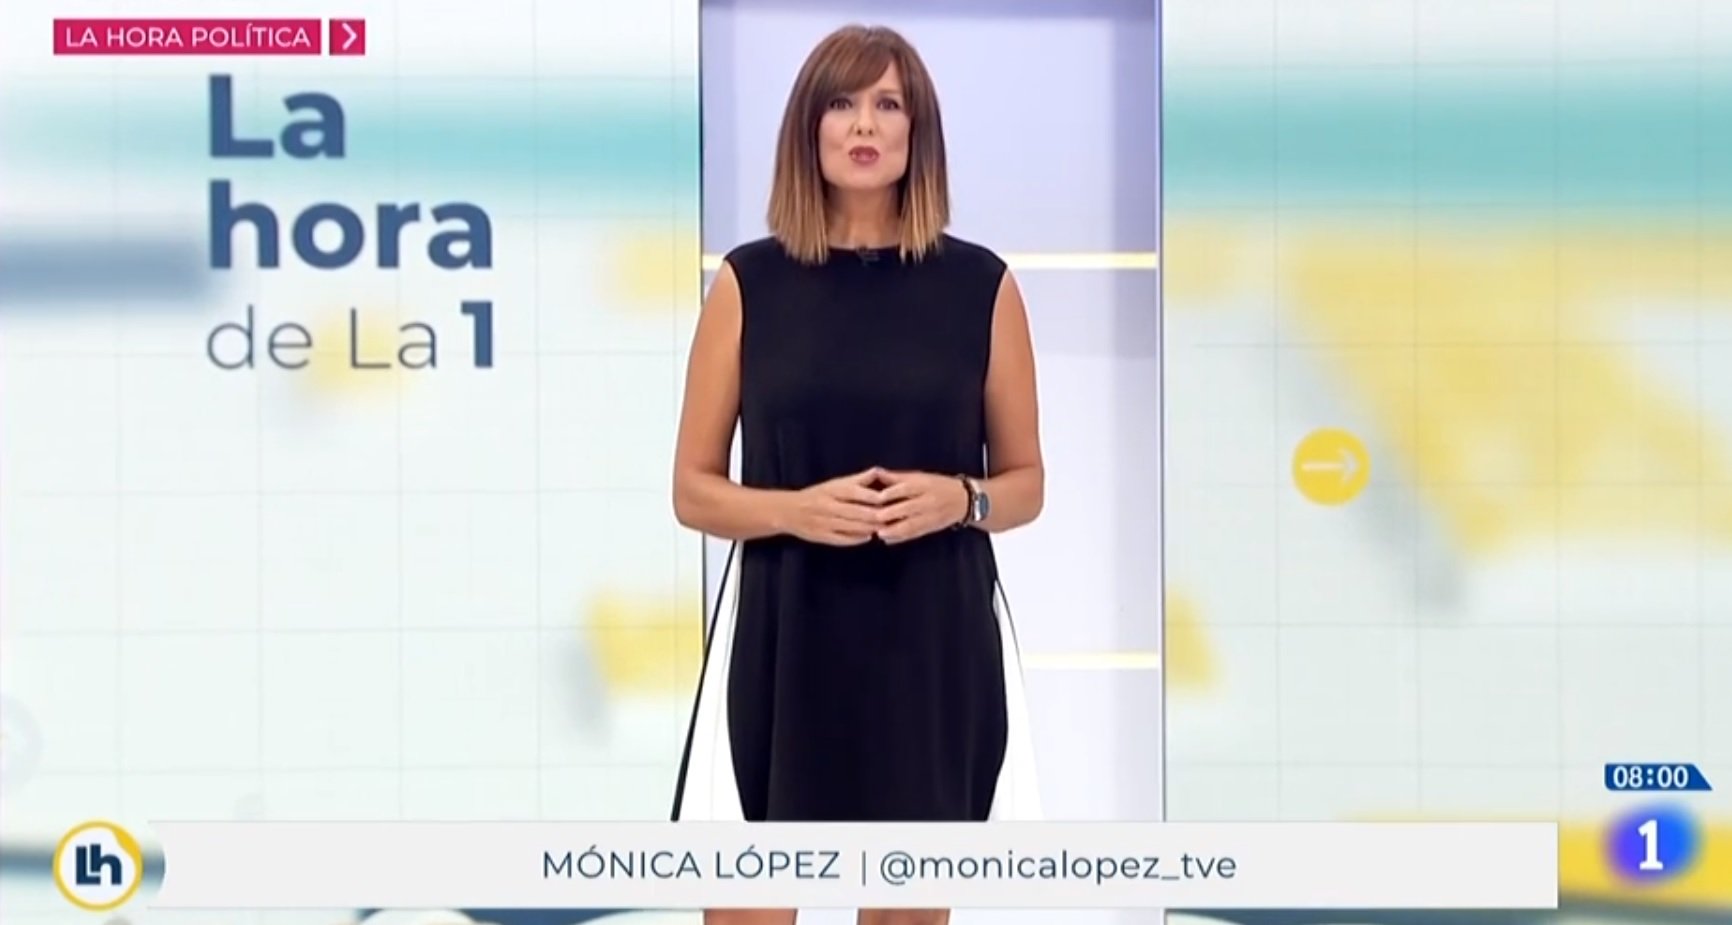 Mònica López se españoliza en TVE y pasa a ser "Mónica" con acento castellano